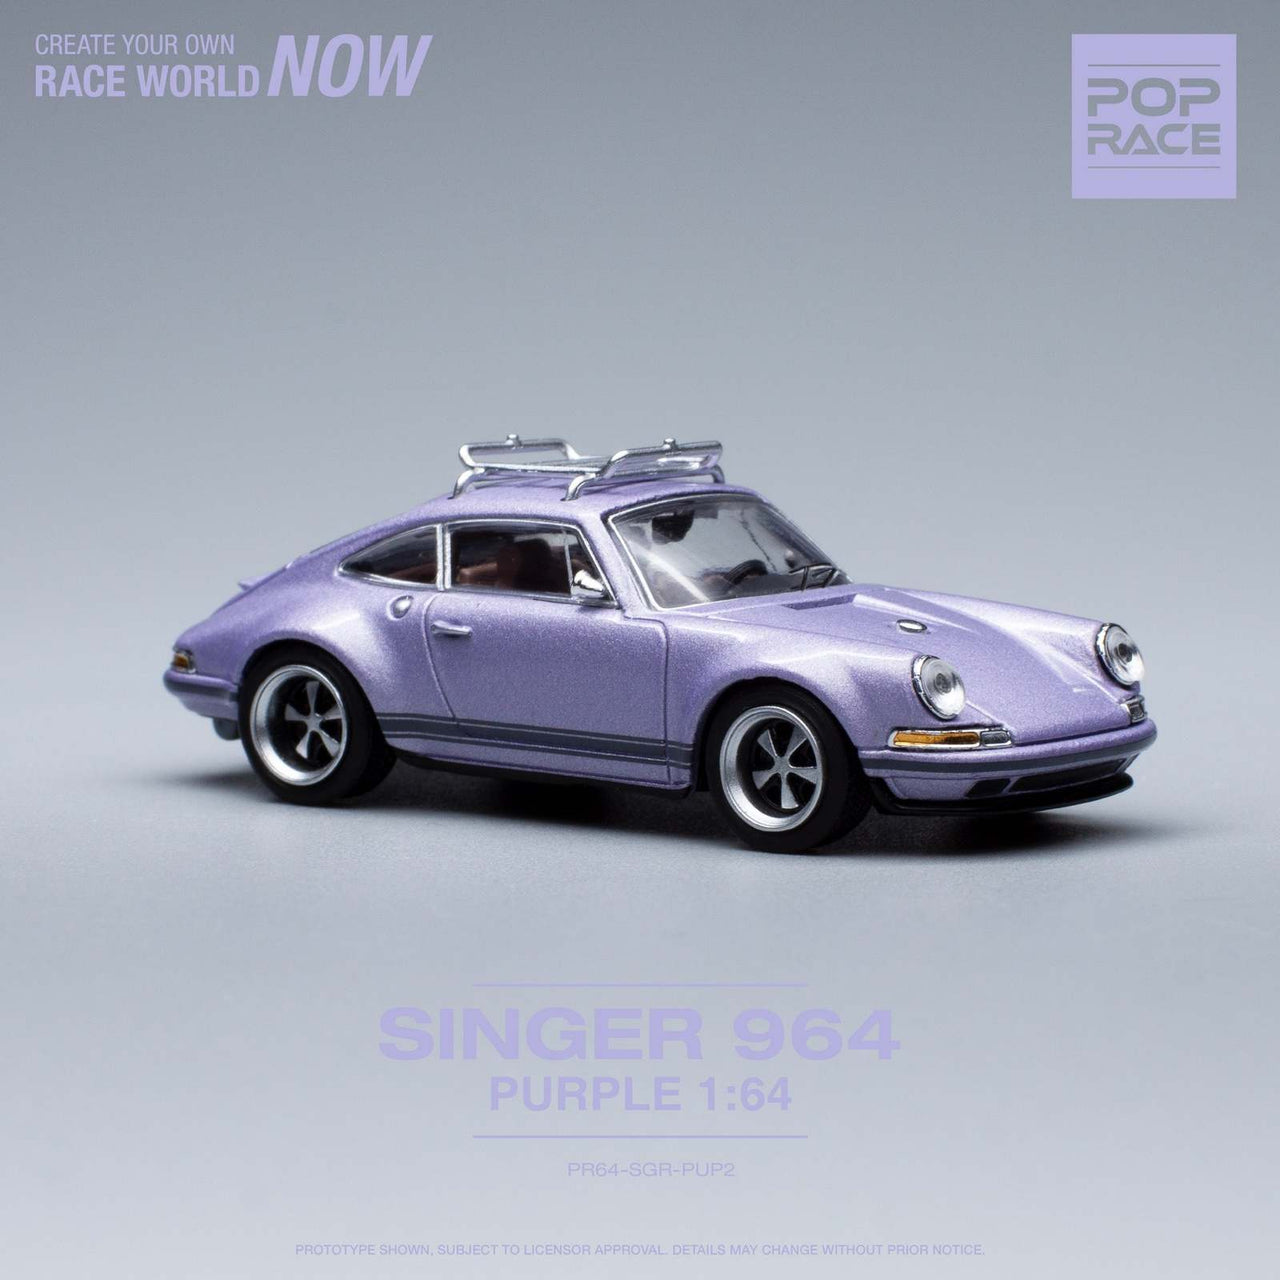 Pop Race 1:64 Porsche Singer 964 Purple